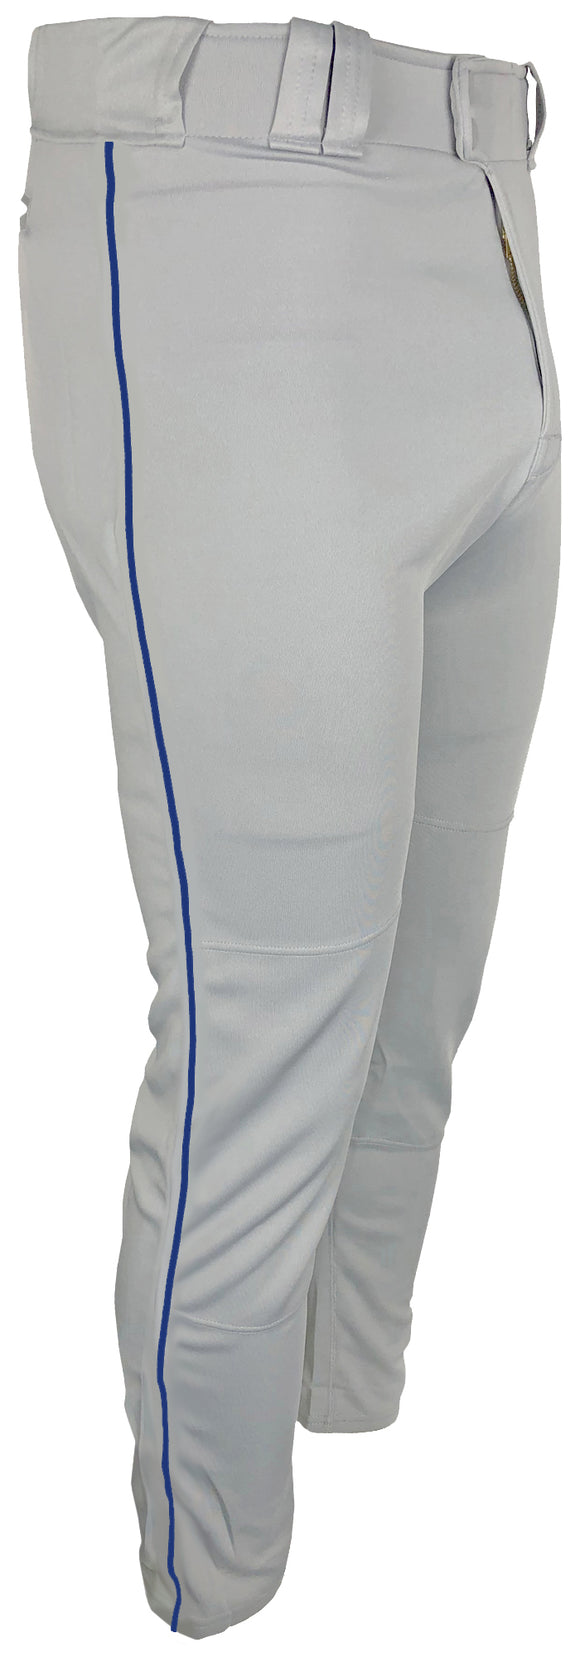 Baseball pants- required